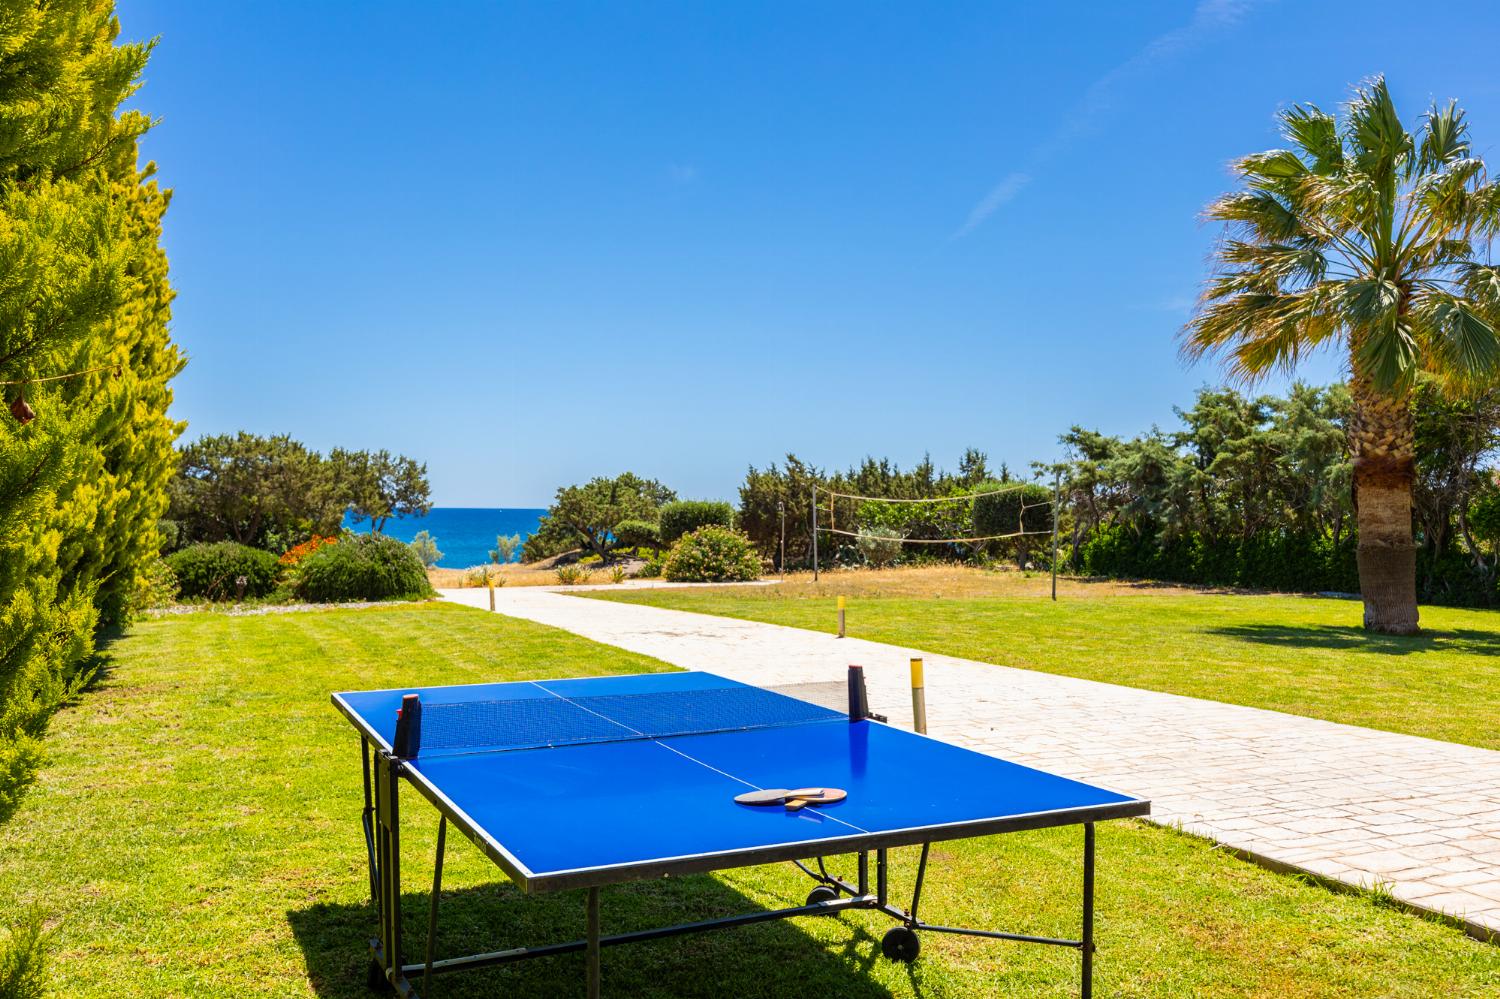 Garden area with table tennis